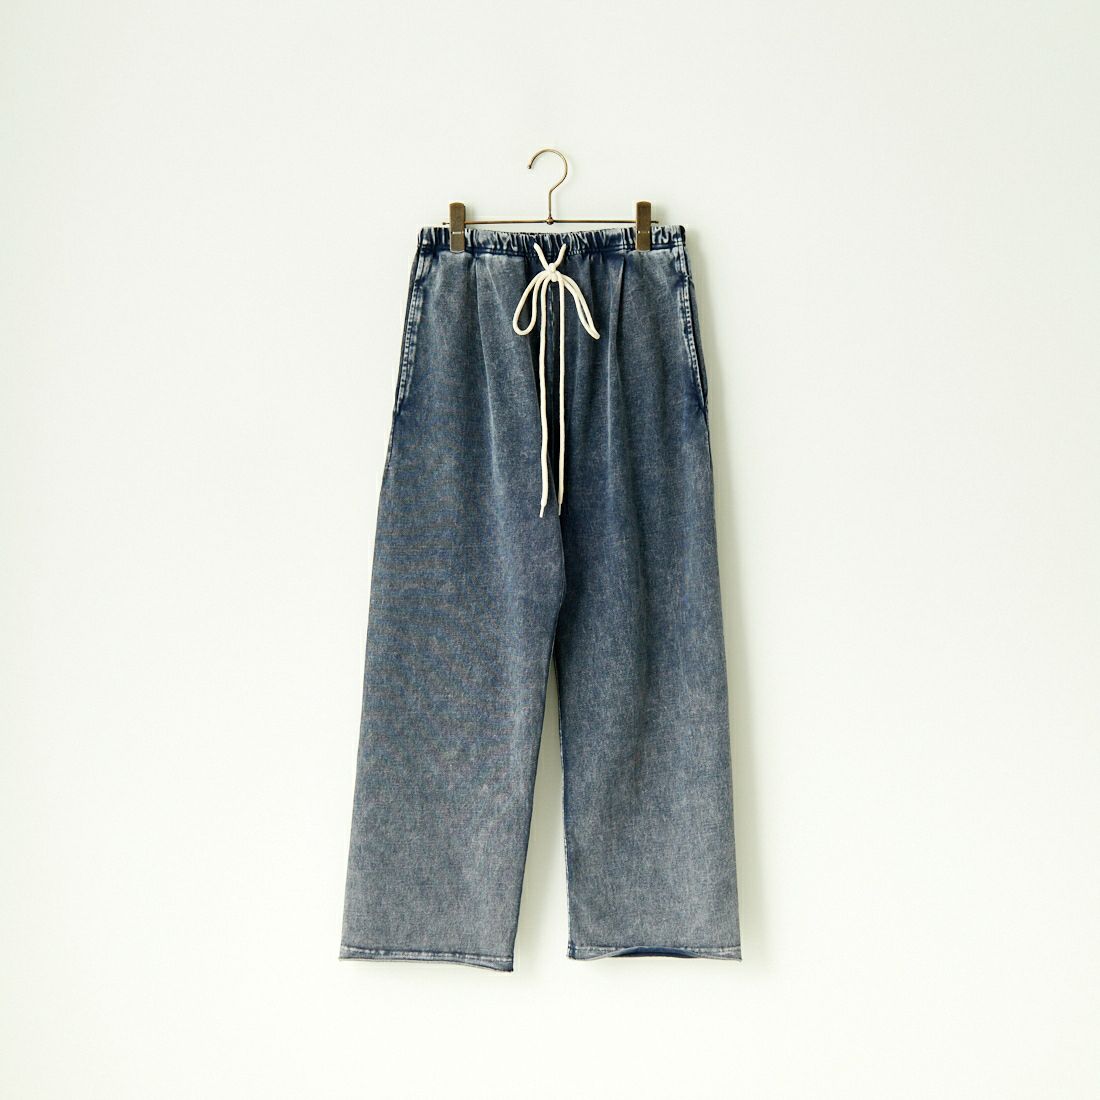 Jeans Factory Clothes [ジーンズファクトリークローズ] アシッド加工スウェットパンツ [2422-424IN] NAVY